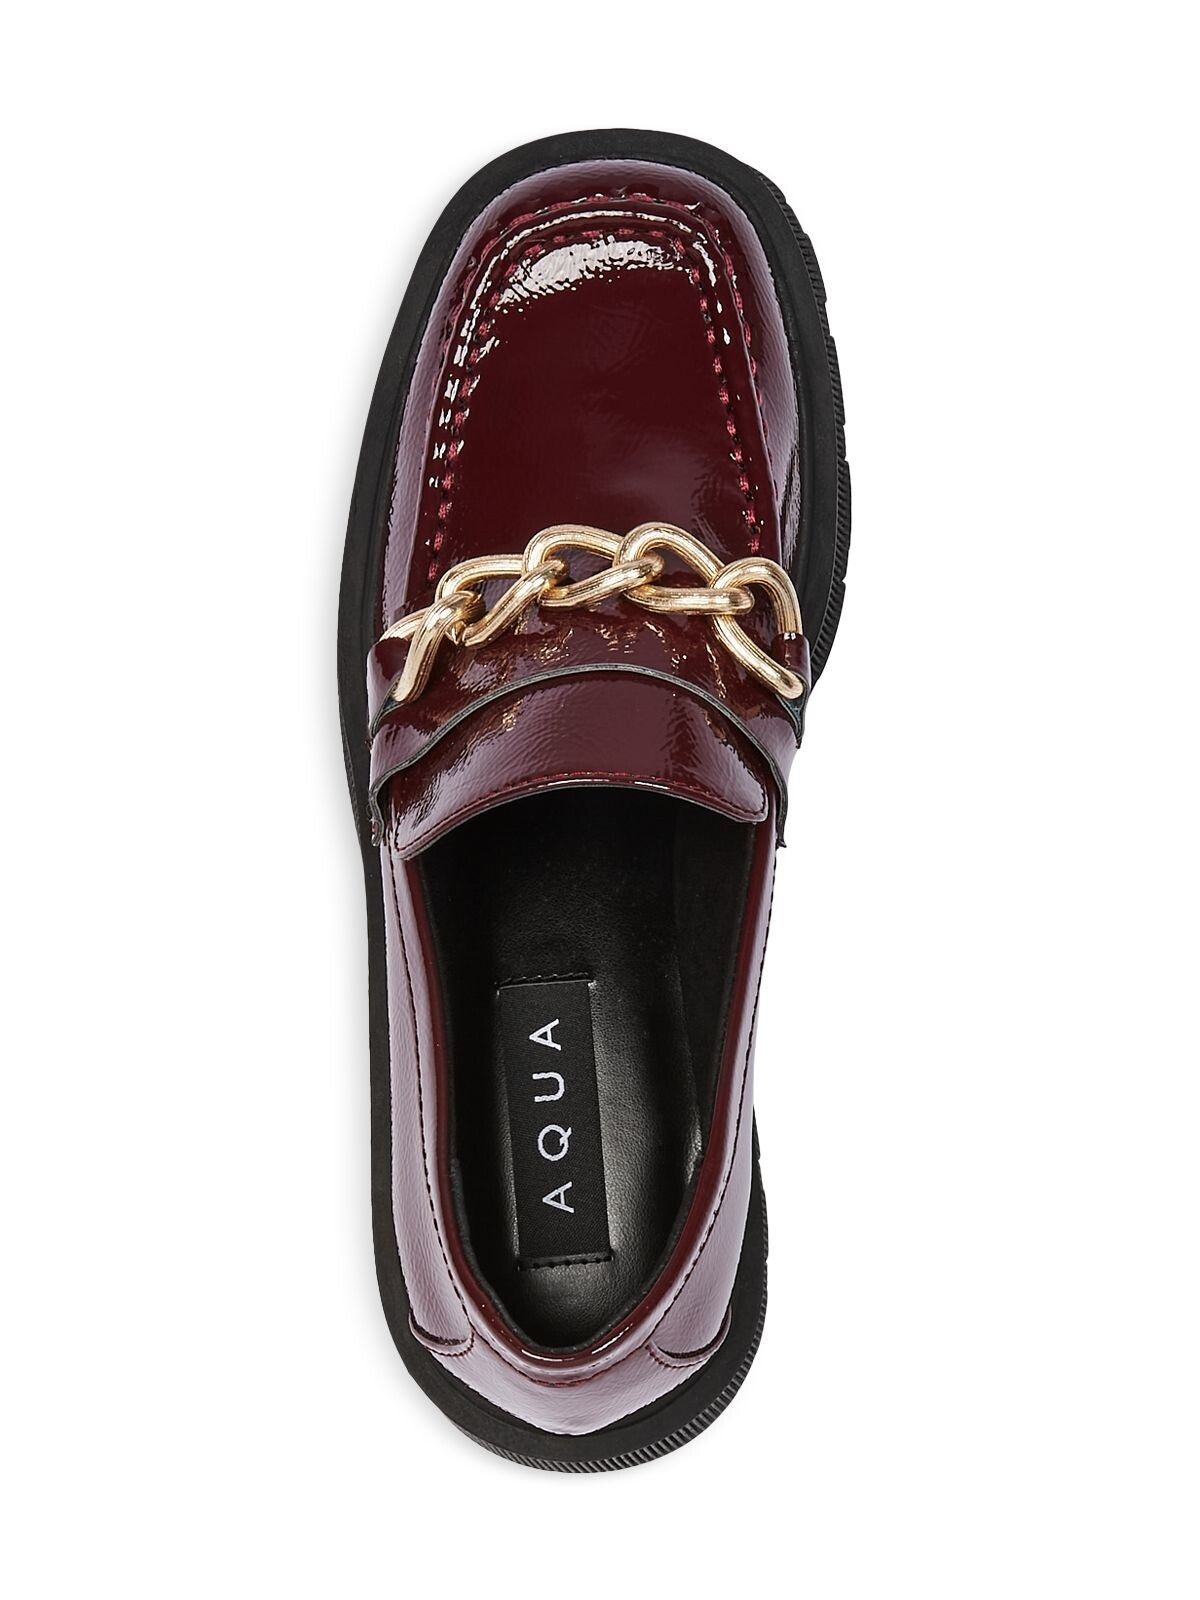 AQUA Womens Burgundy Chain 1" Platform Comfort Brynn Square Toe Block Heel Slip On Leather Loafers Shoes 8 M